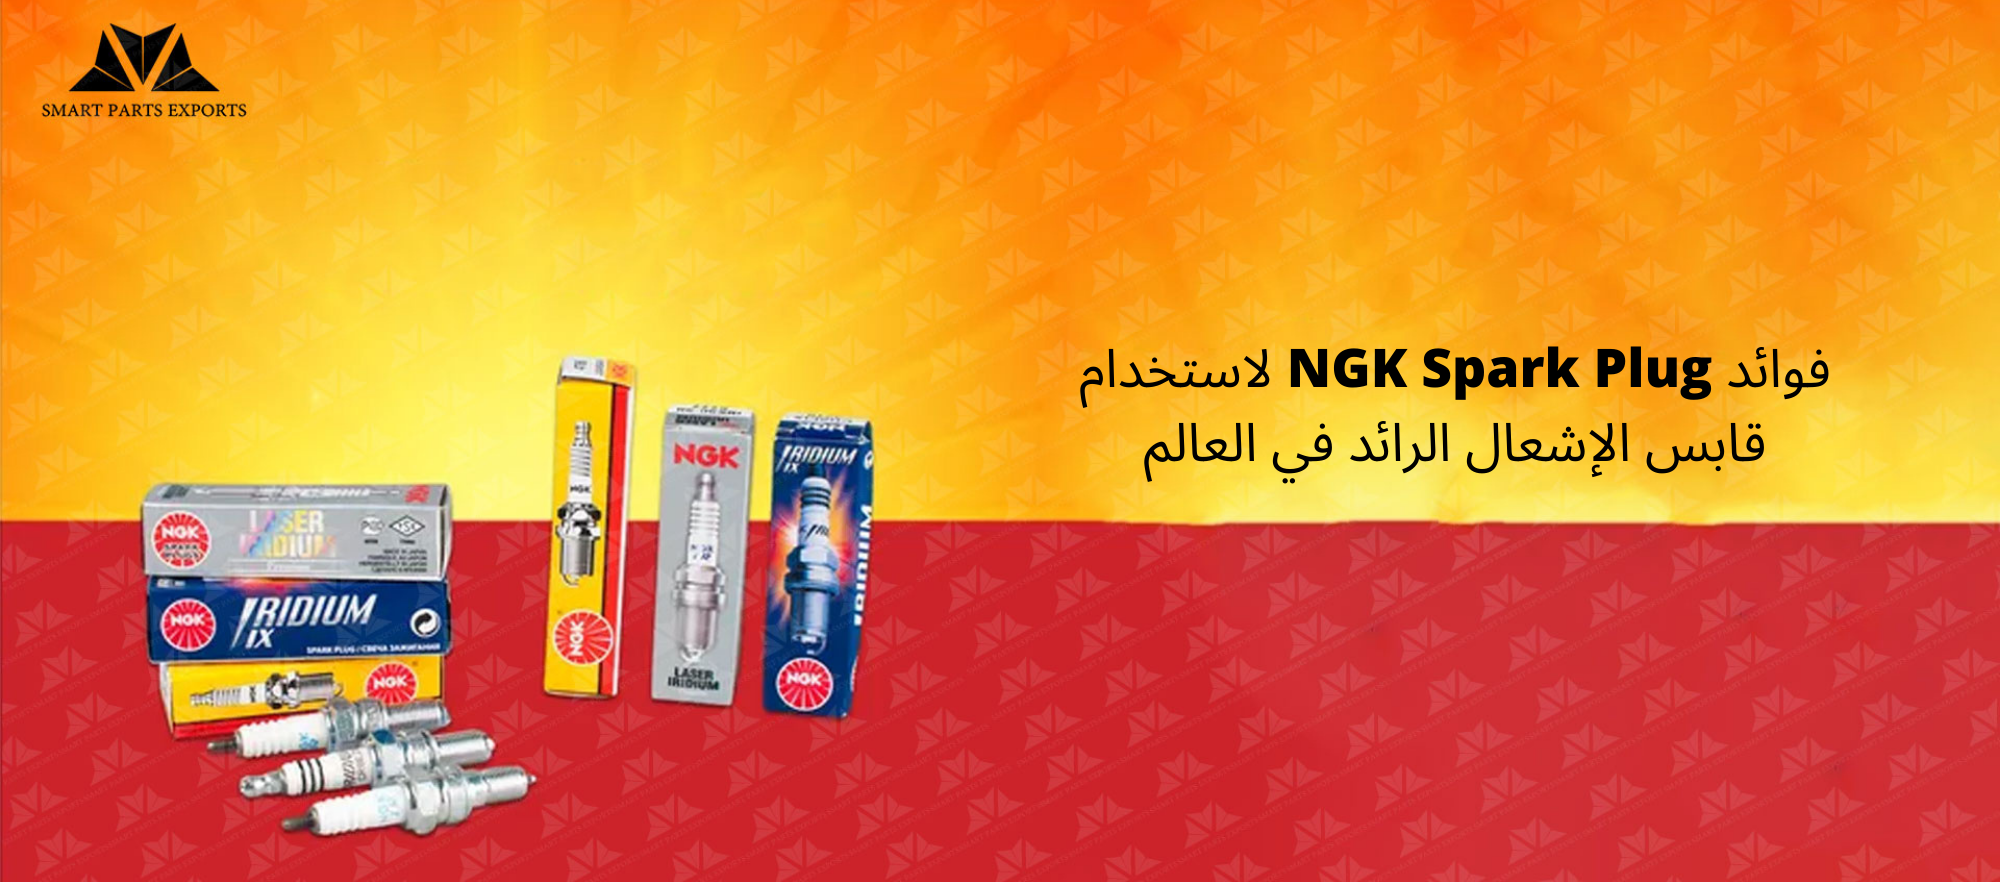 You are currently viewing NGK Spark Plug: فوائد استخدام شمعة الإشعال الرائدة في العالم